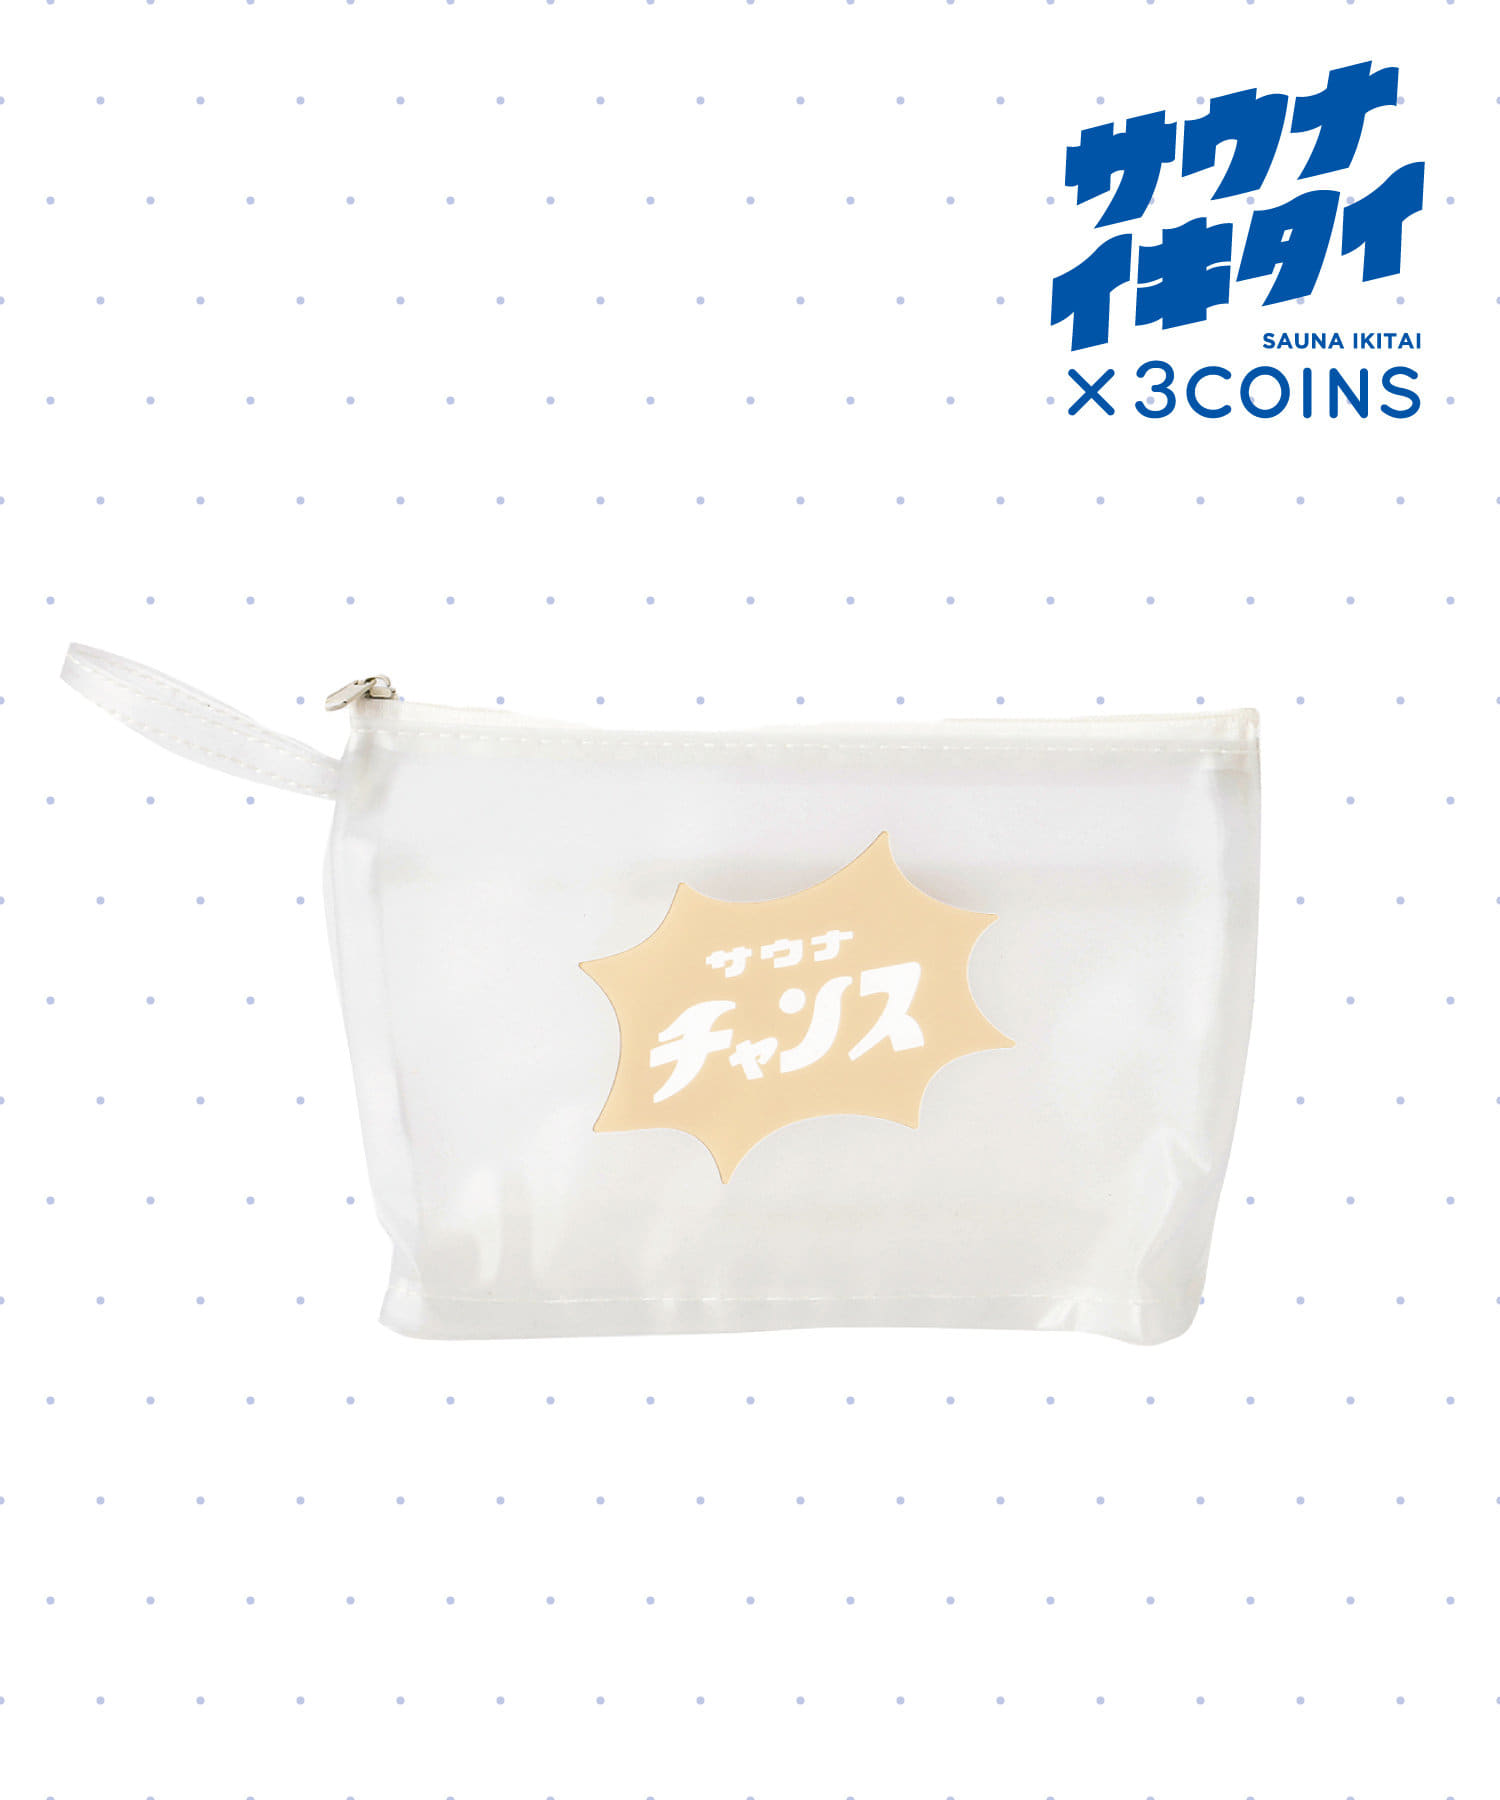 3COINS(スリーコインズ) 【サウナイキタイ】PVCポーチ